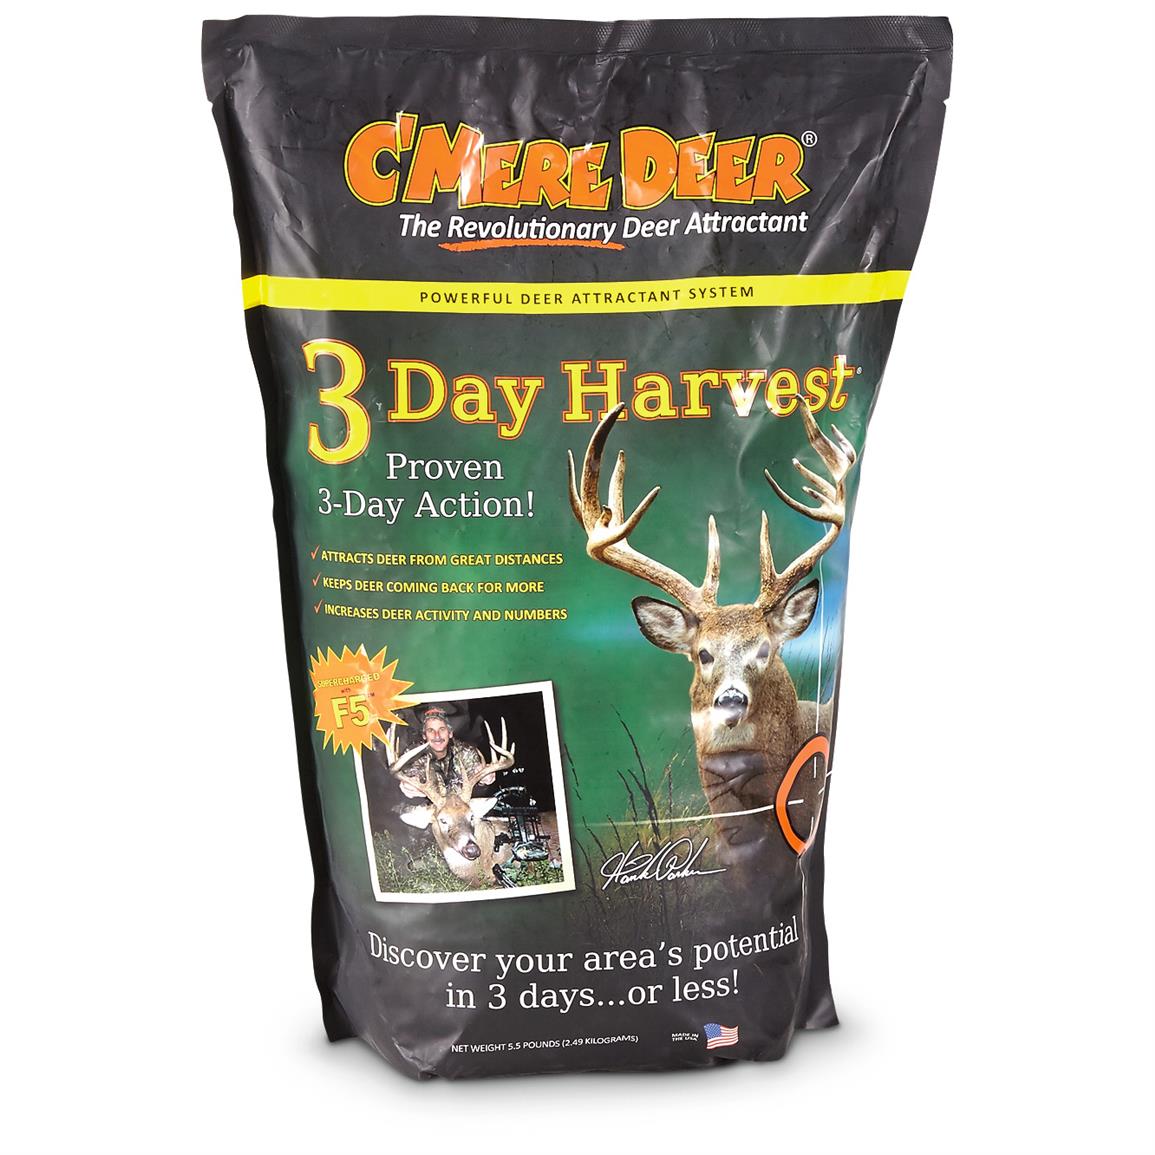 C'Mere Deer 3-Day Harvest, 2 Gallons - 669417, Mineral Attractants ...